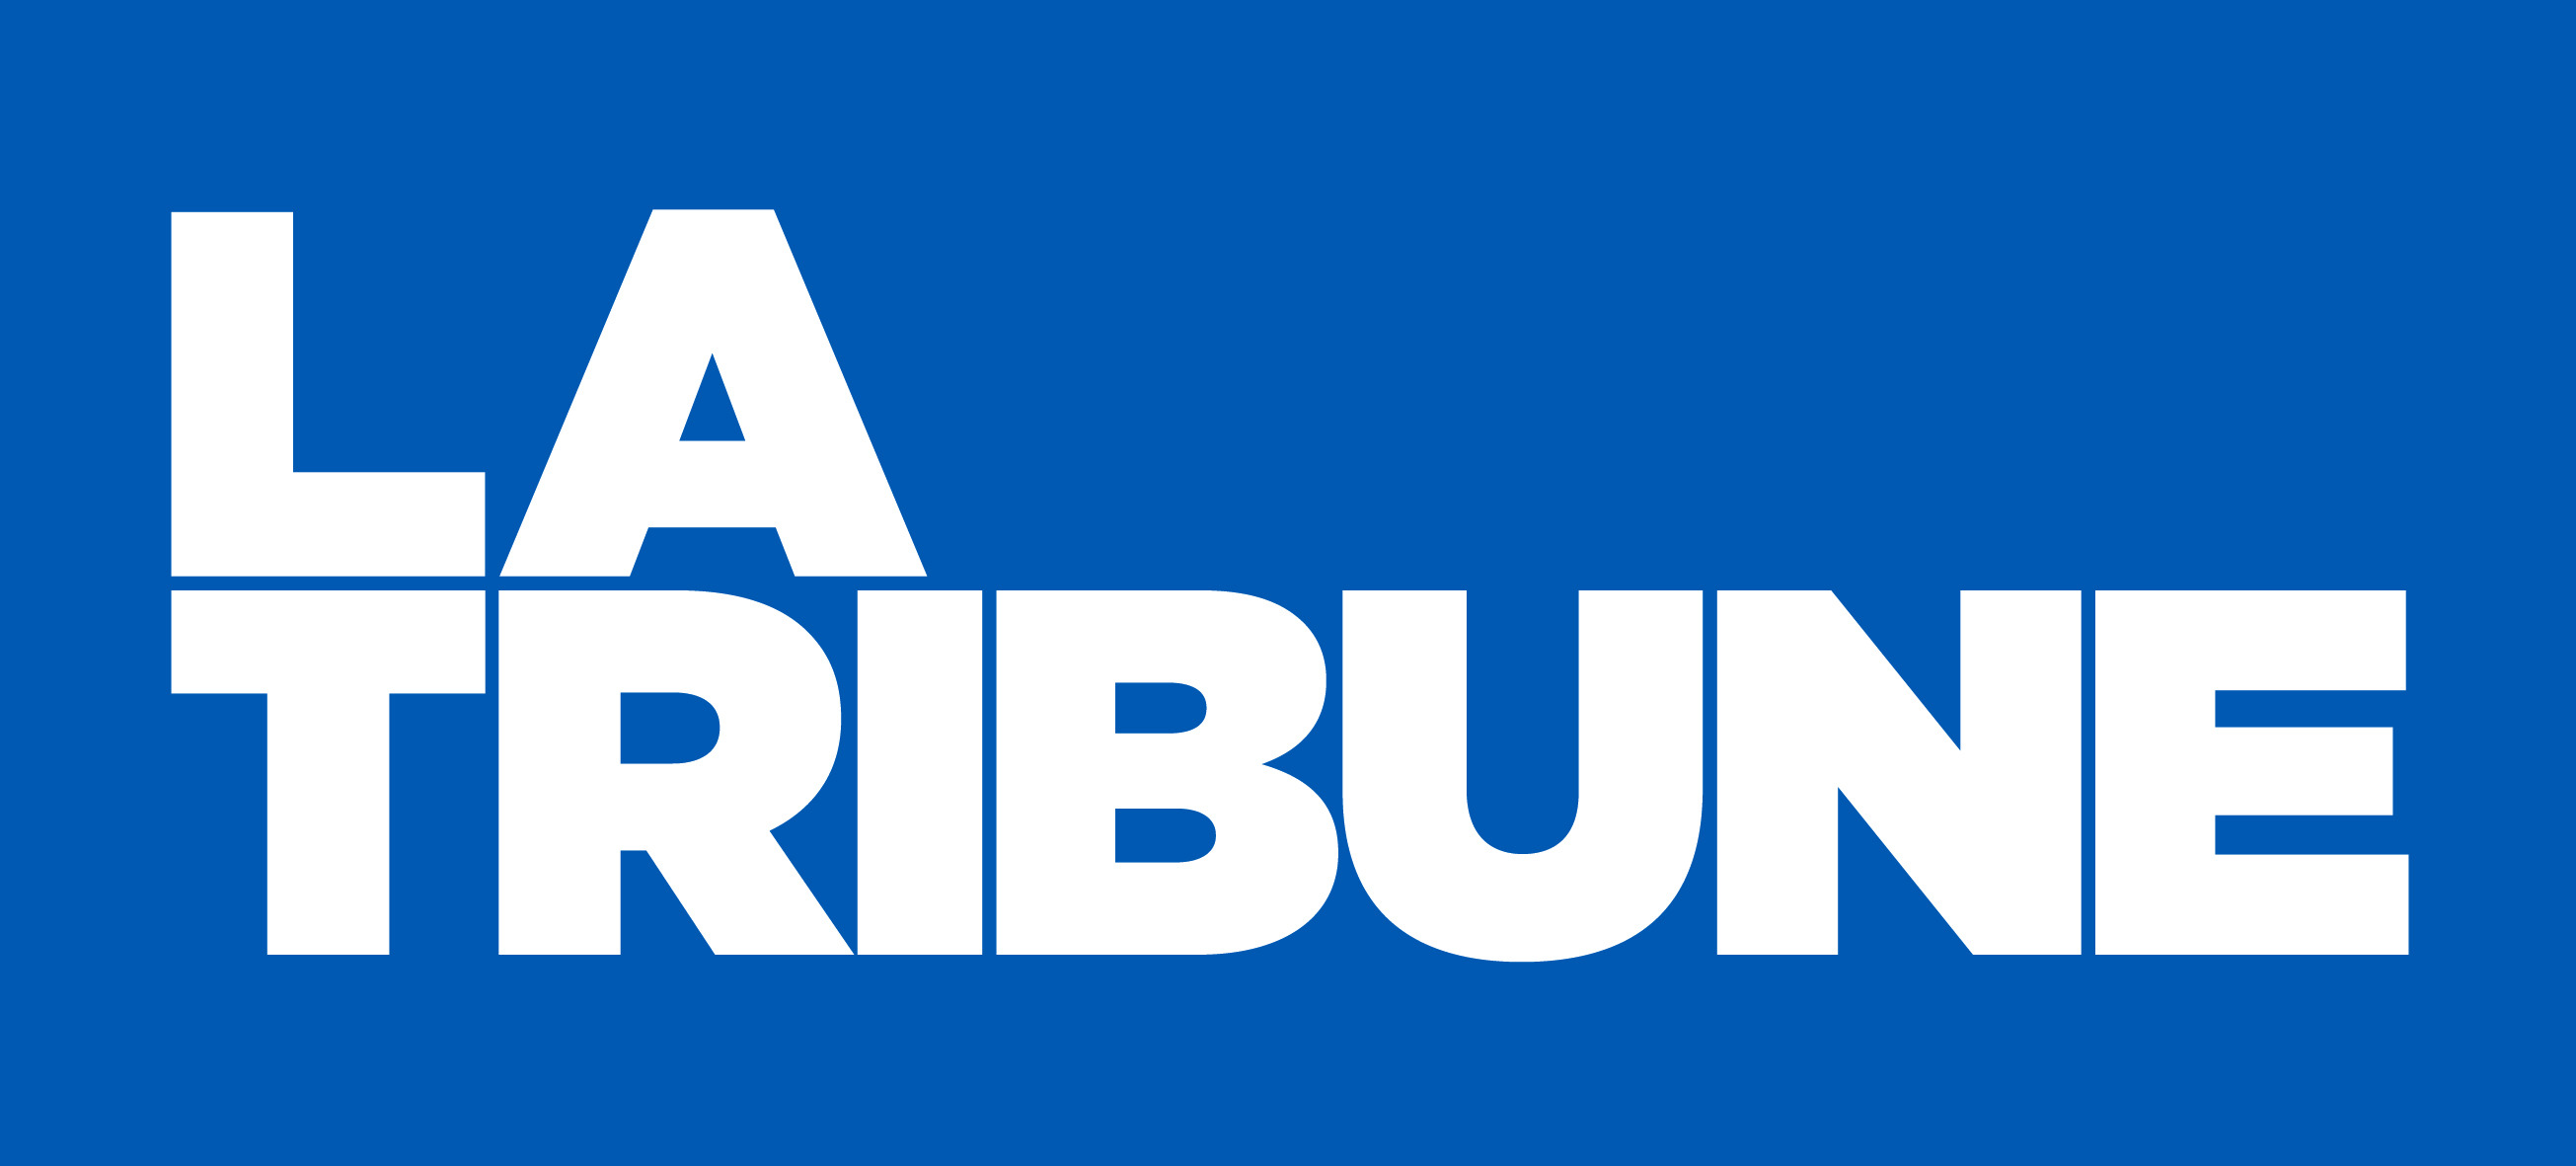 La magazine. La Tribune. Tribune logo. Логотип трибун. La логотип.